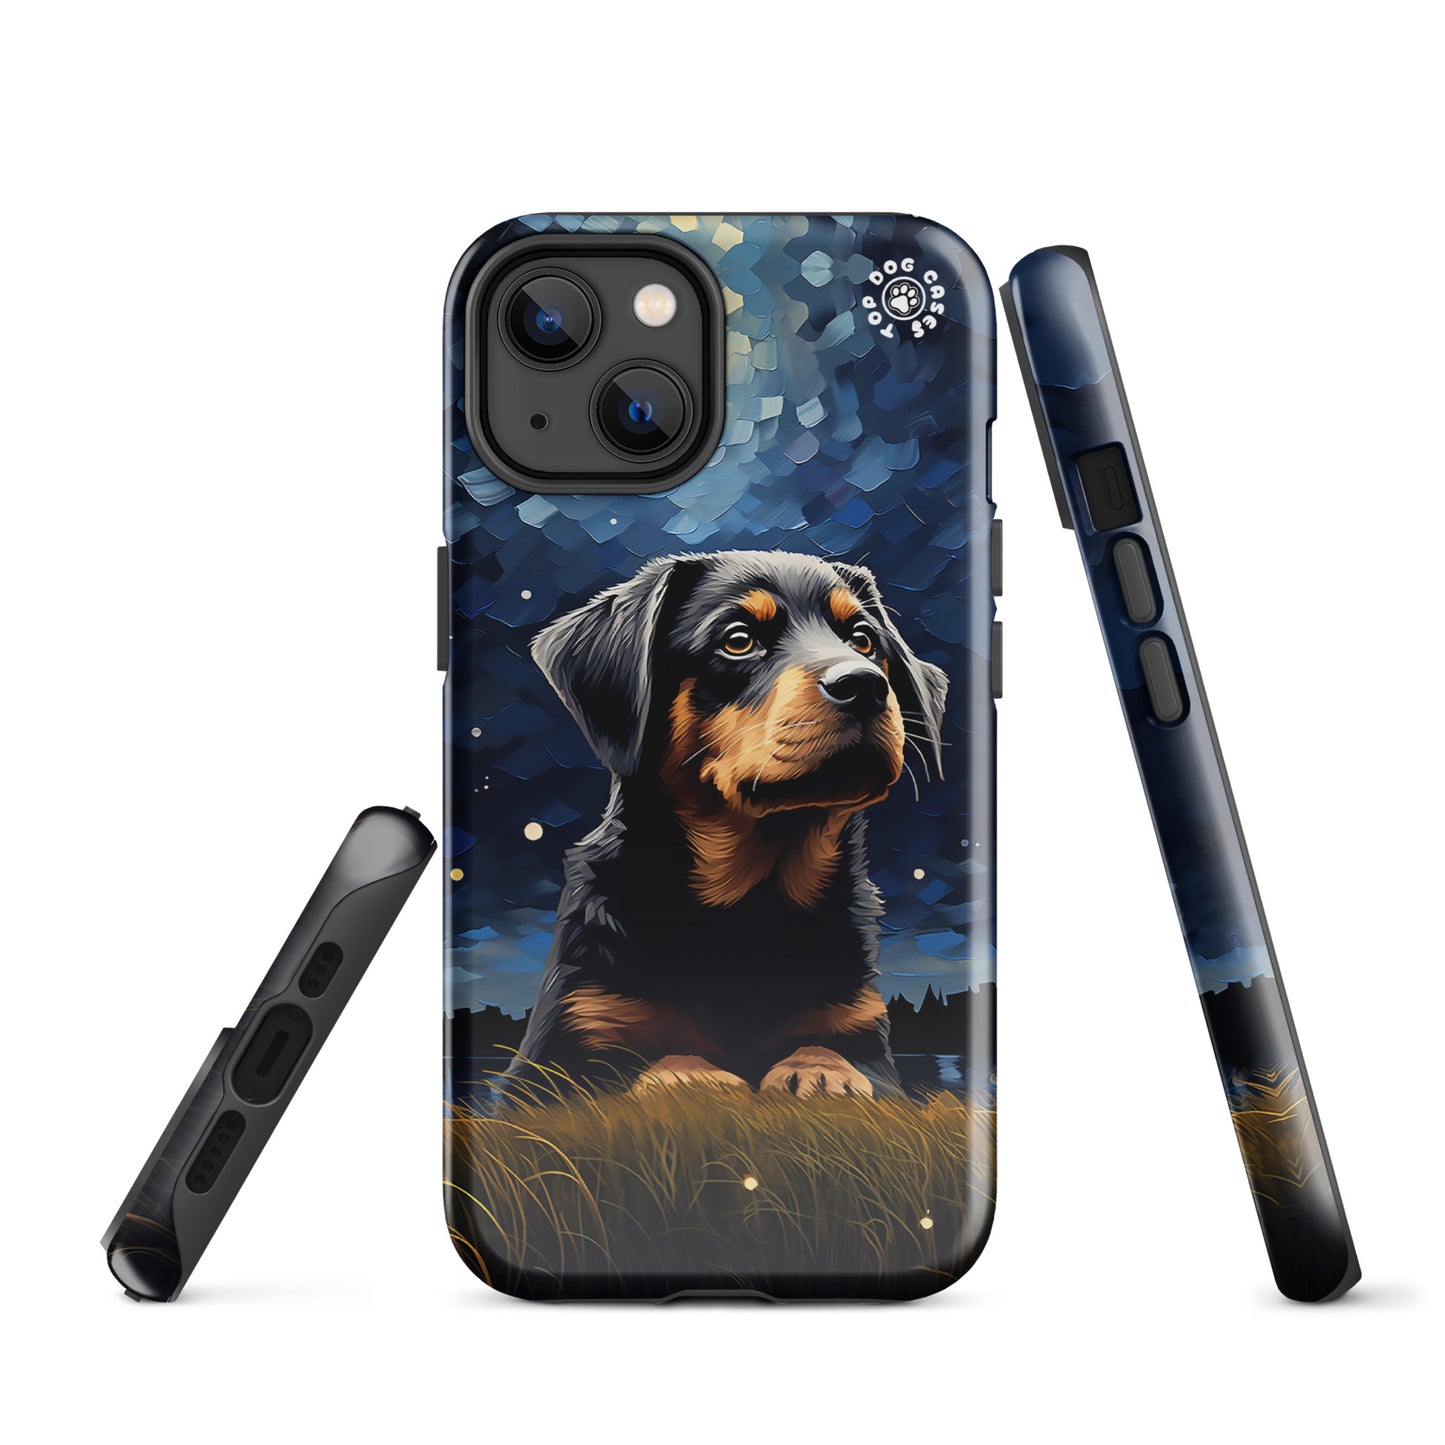 Rottweiler - iPhone 14 Case - Top Dog Cases - #CuteDog, #CuteDogs, #CutePhoneCases, #DogPhoneCase, #dogs, #iPhone14, #iPhone14case, #iPhone14DogCase, #iPhone14Plus, #iPhone14Pluscase, #iPhone14Pro, #iPhone14ProMax, #iPhone14ProMaxCase, #Rottweiler